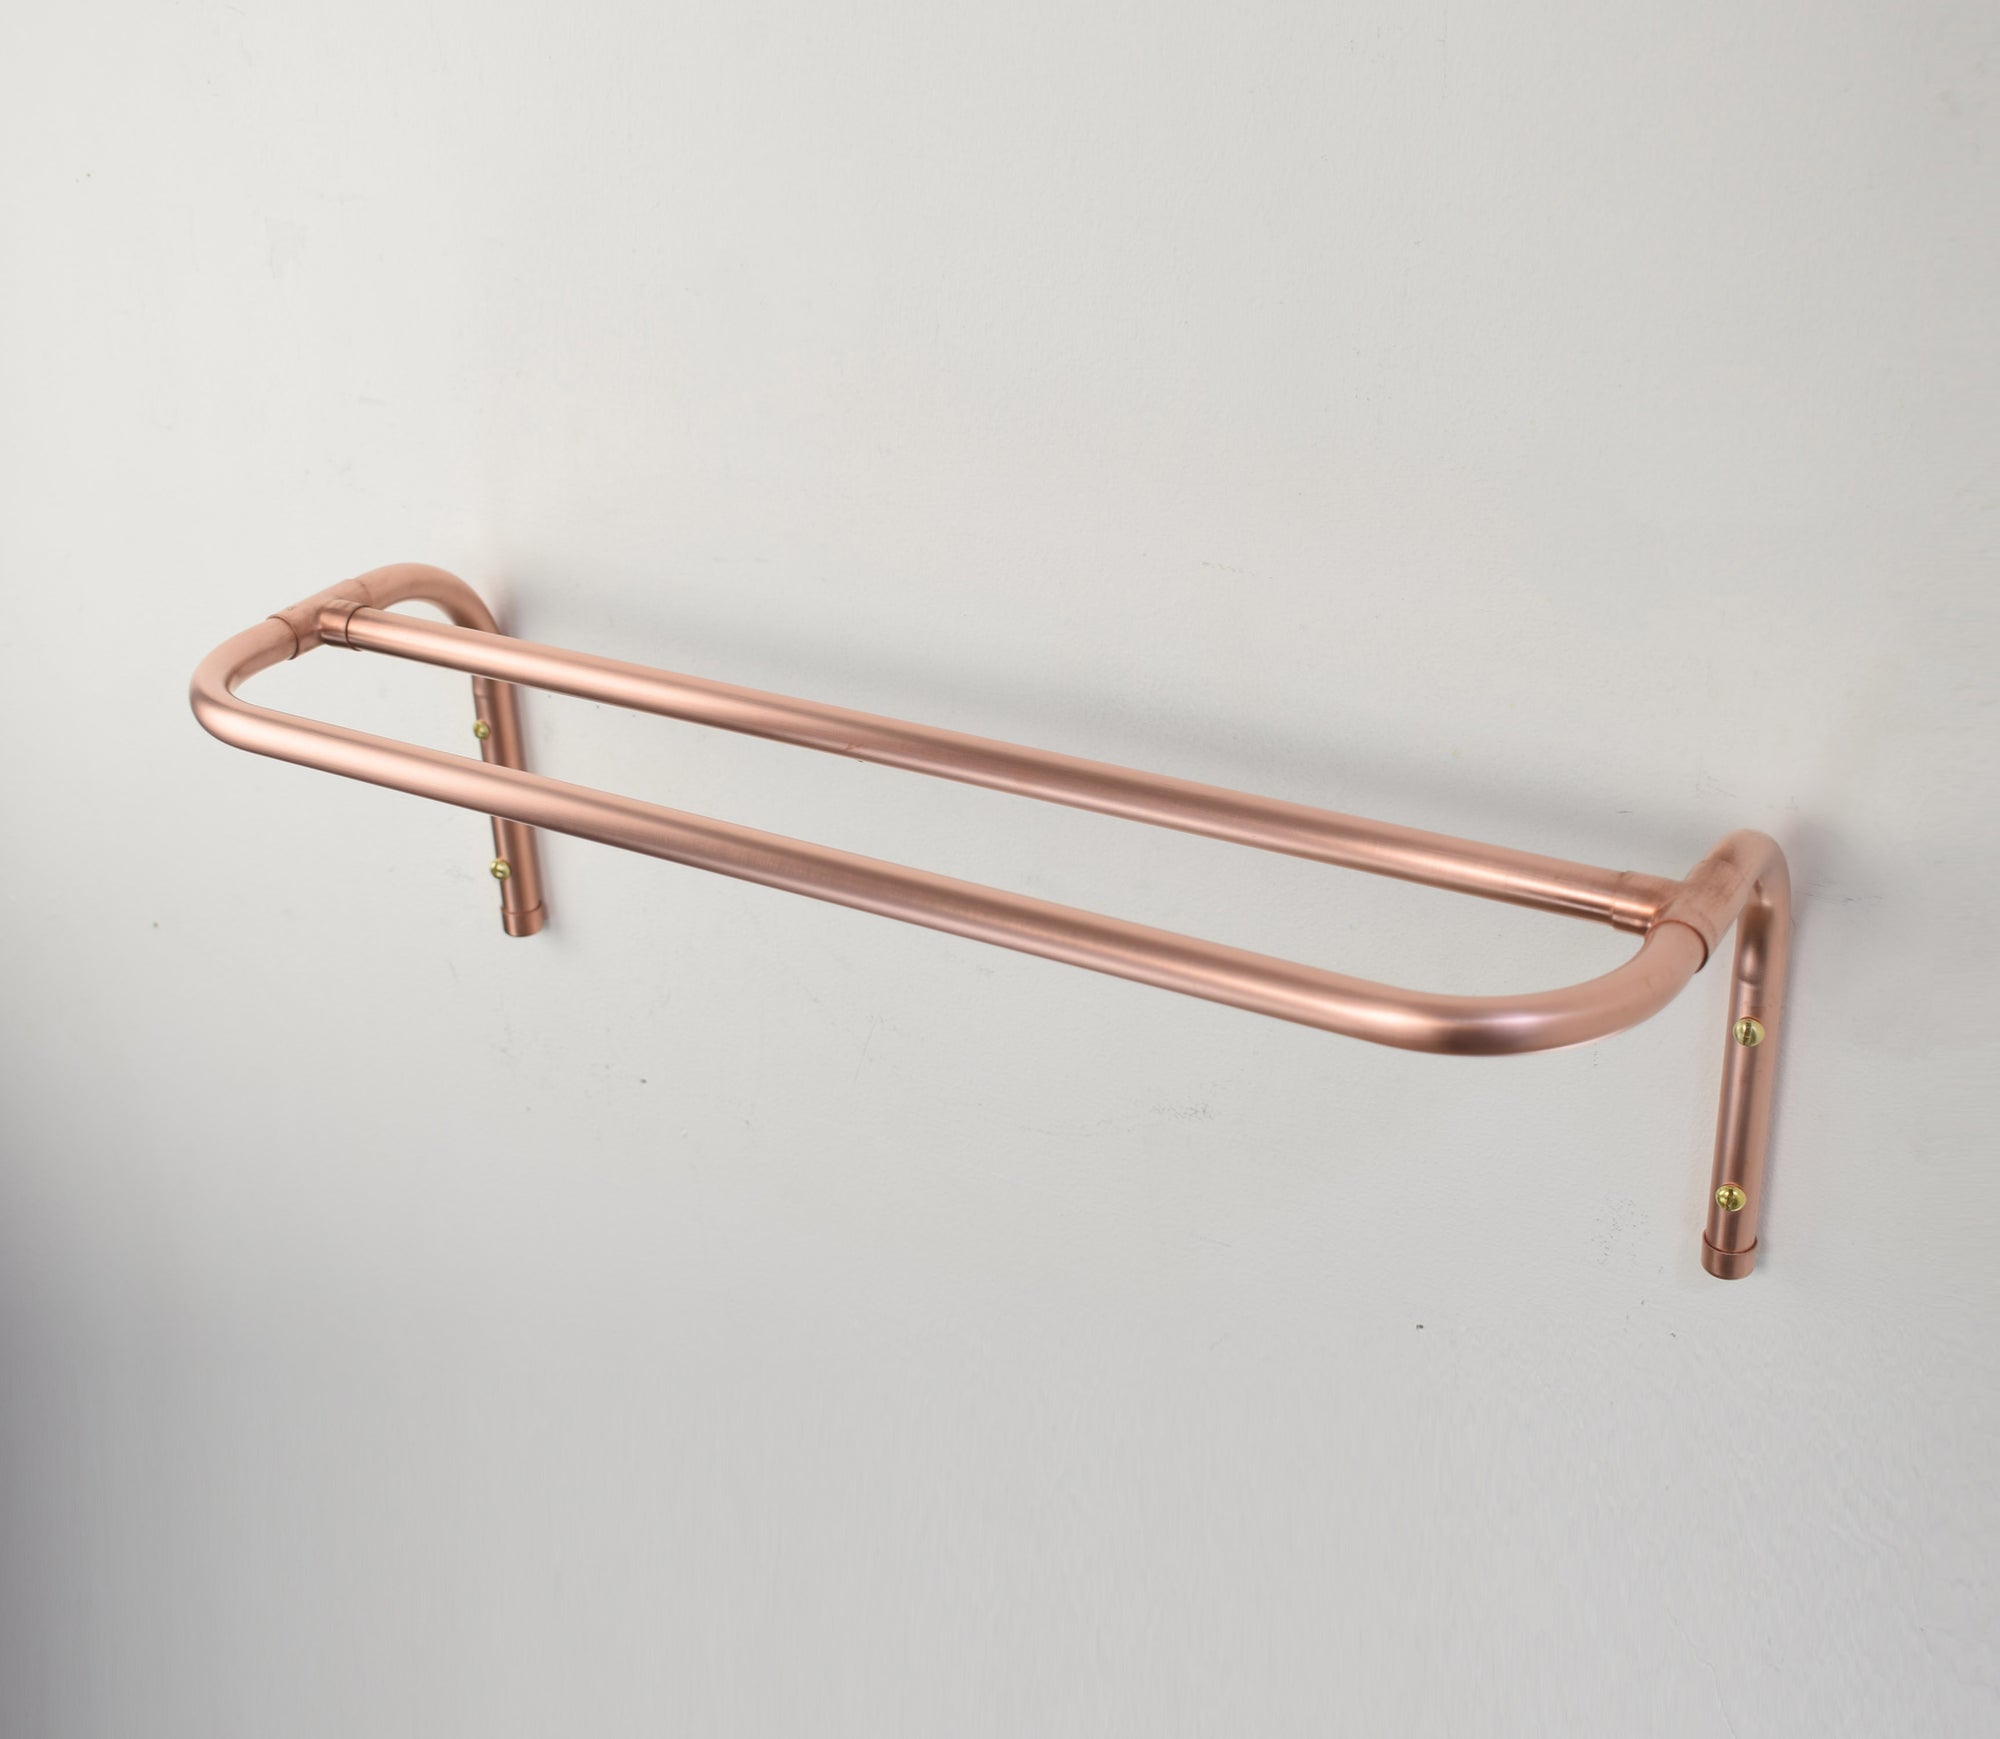 Copper Twin Rail Towel Rack - Proper Copper Design